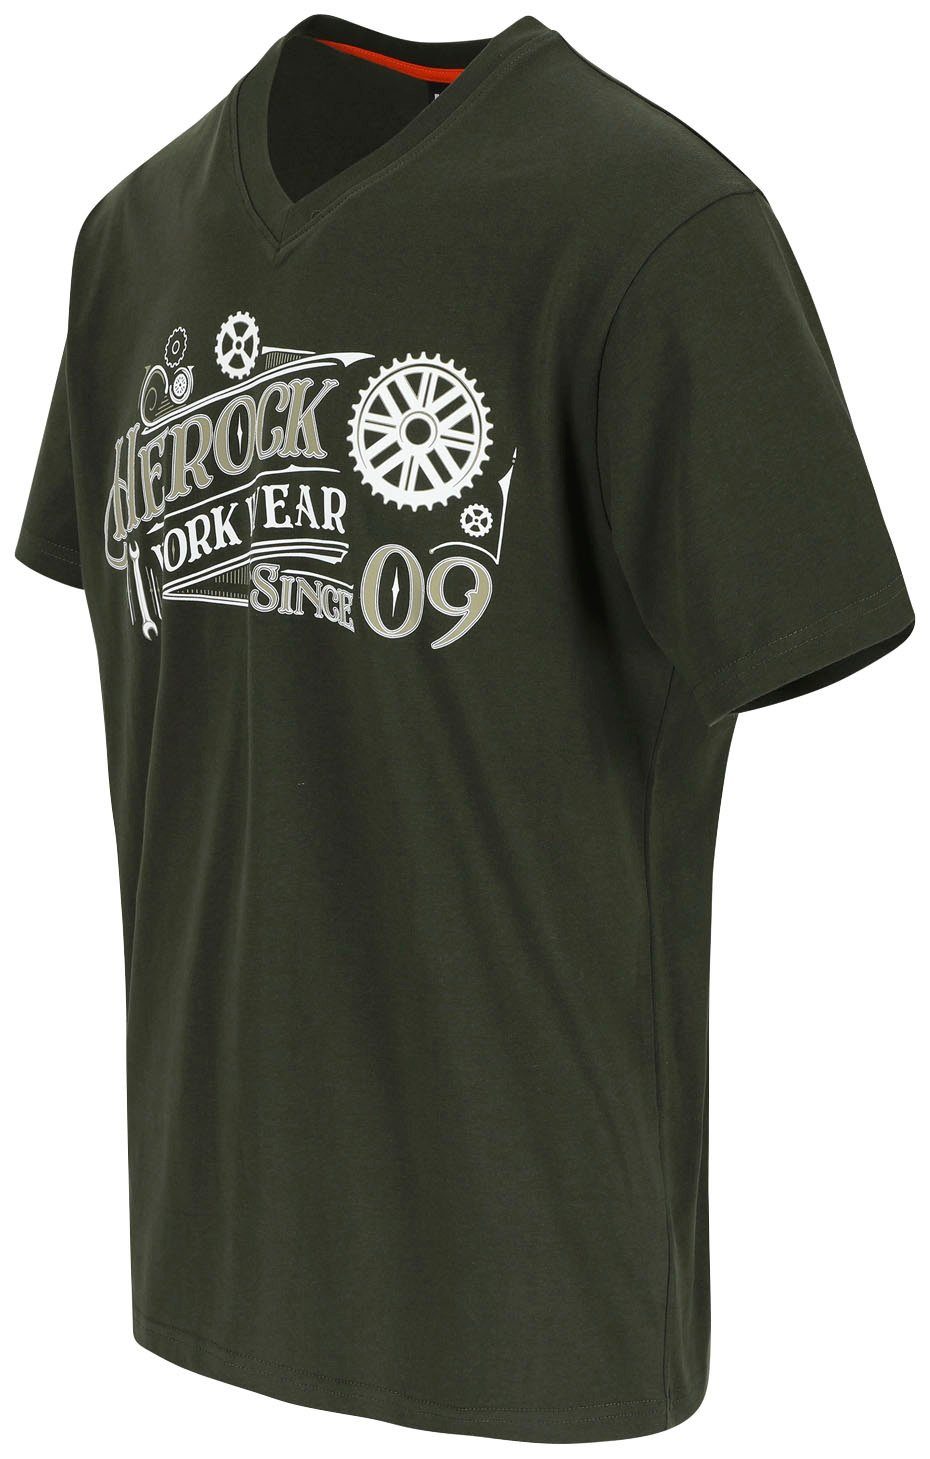 Herock T-Shirt Barber Edition Limited